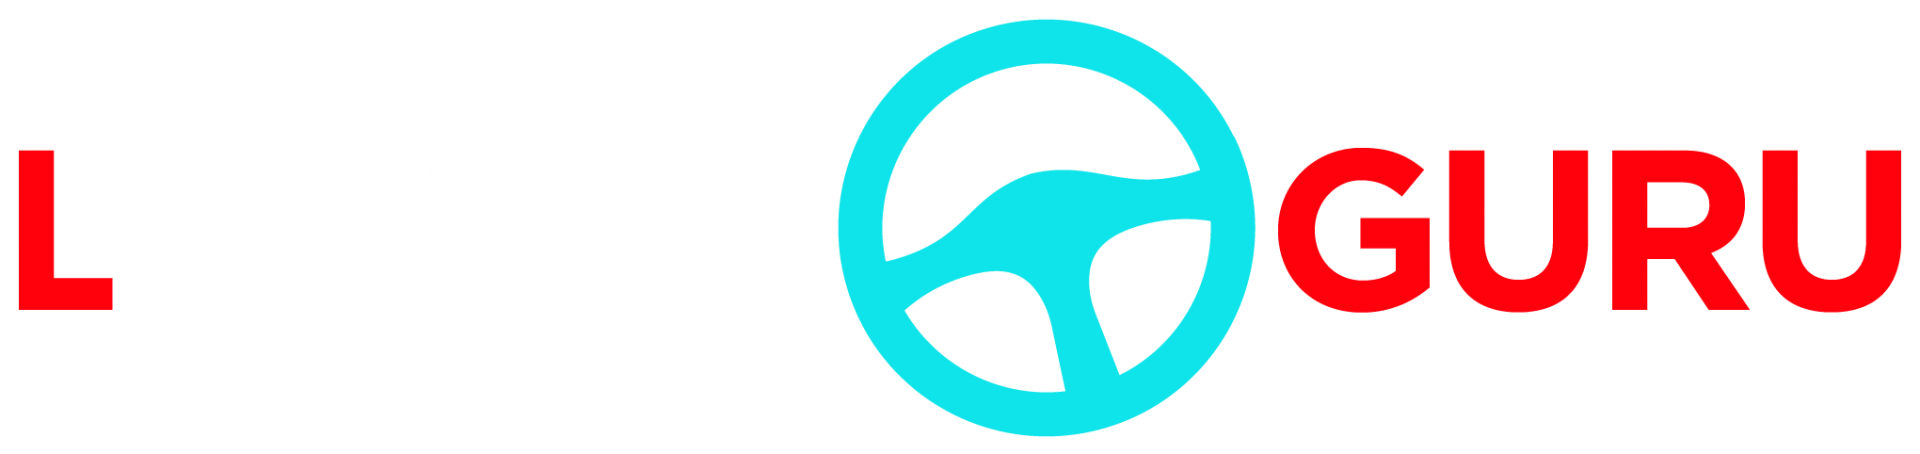 Drivin' Guru logo